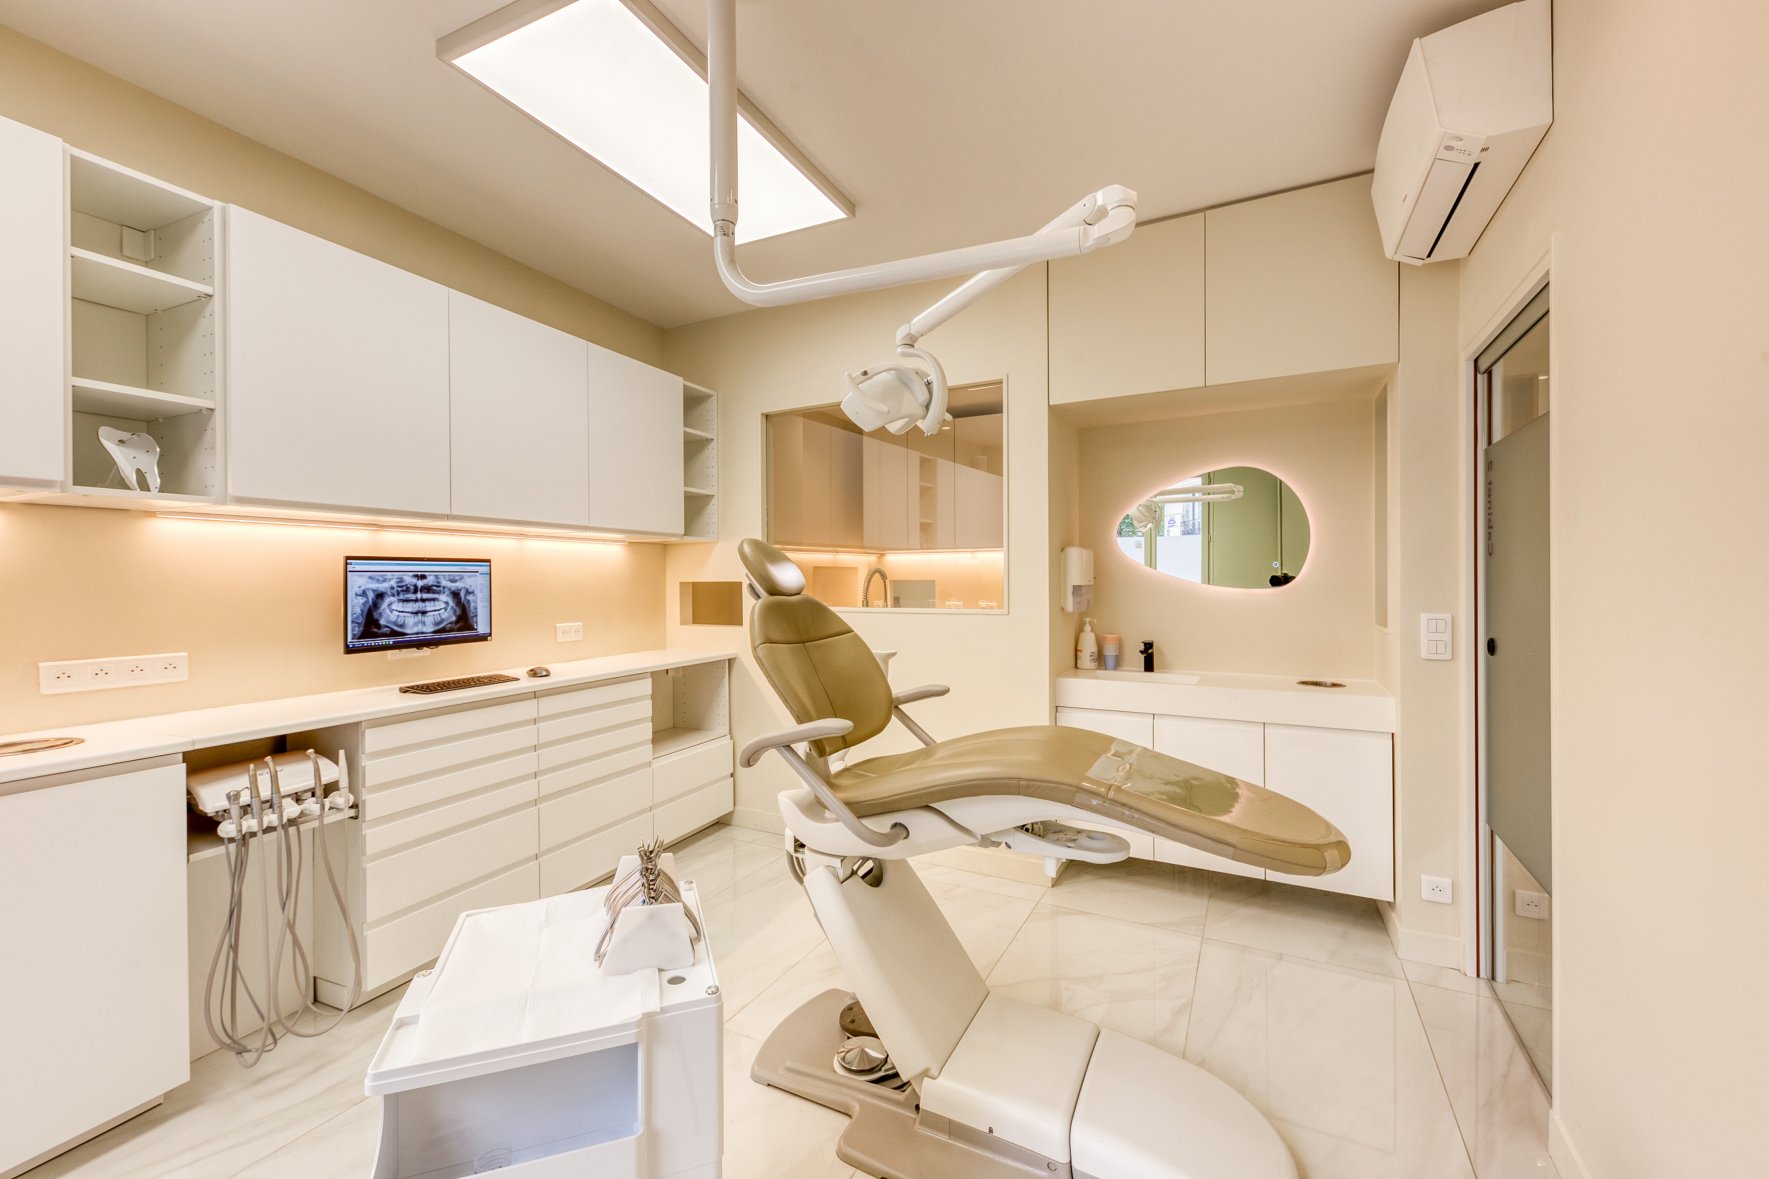 Cabinet d'orthodontie - Paris 12